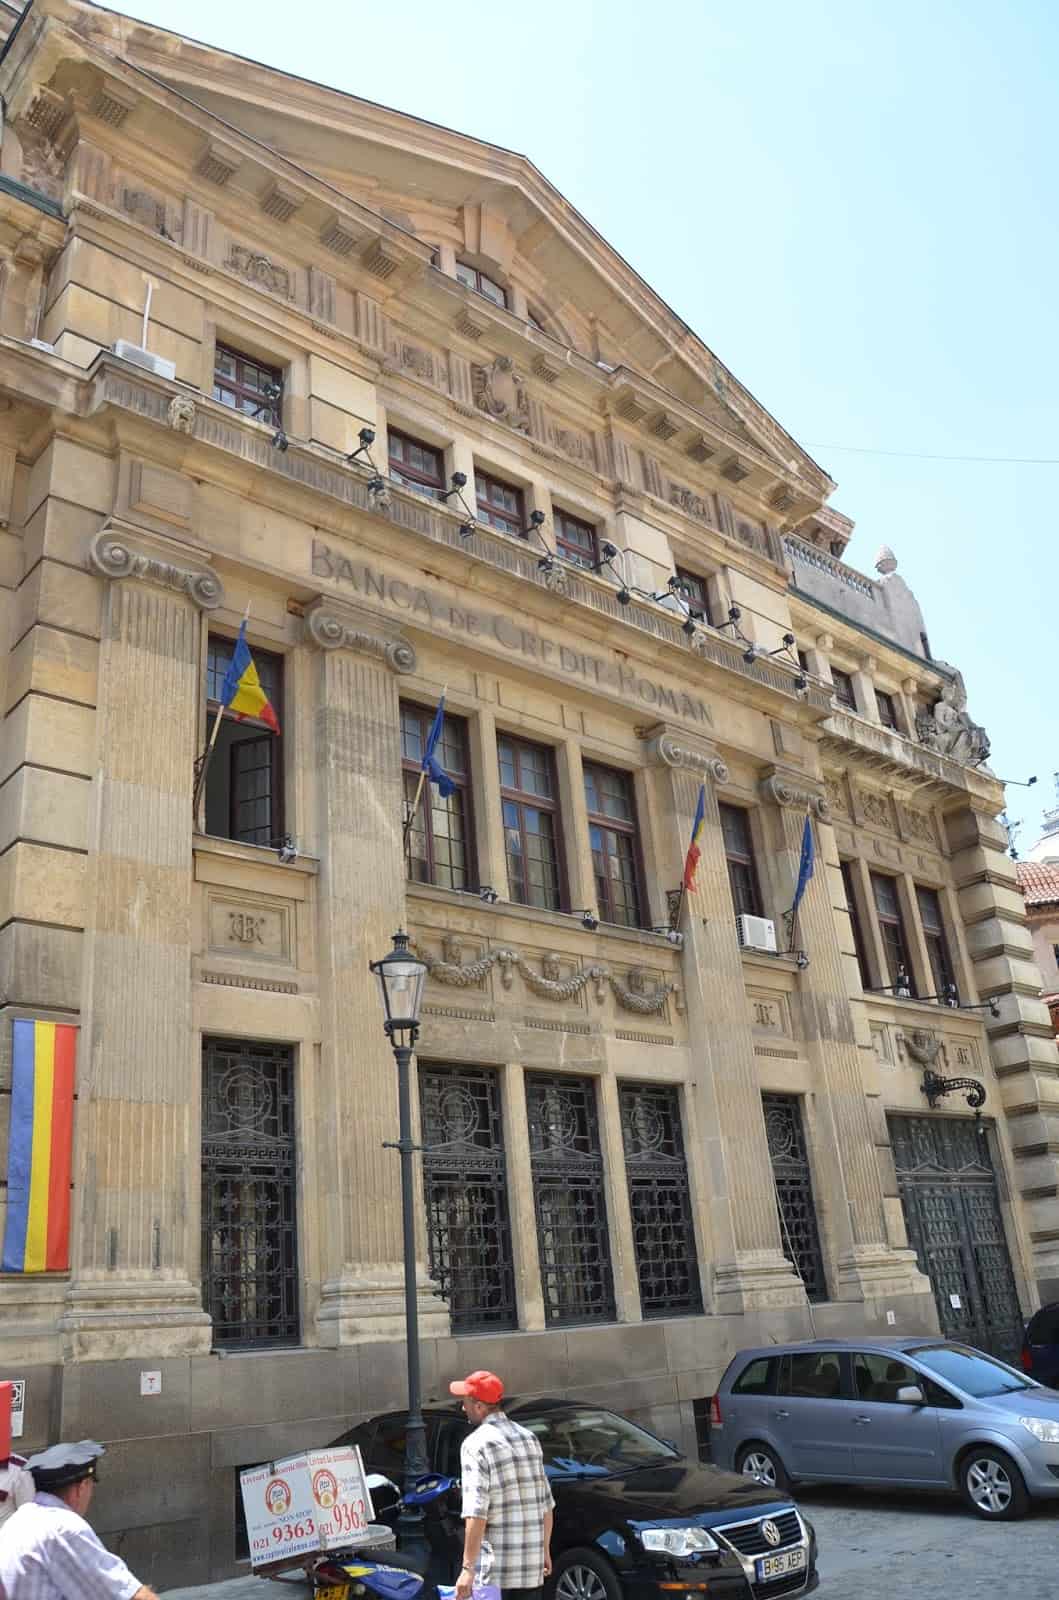 Banca de Credit Romania in Bucharest, Romania